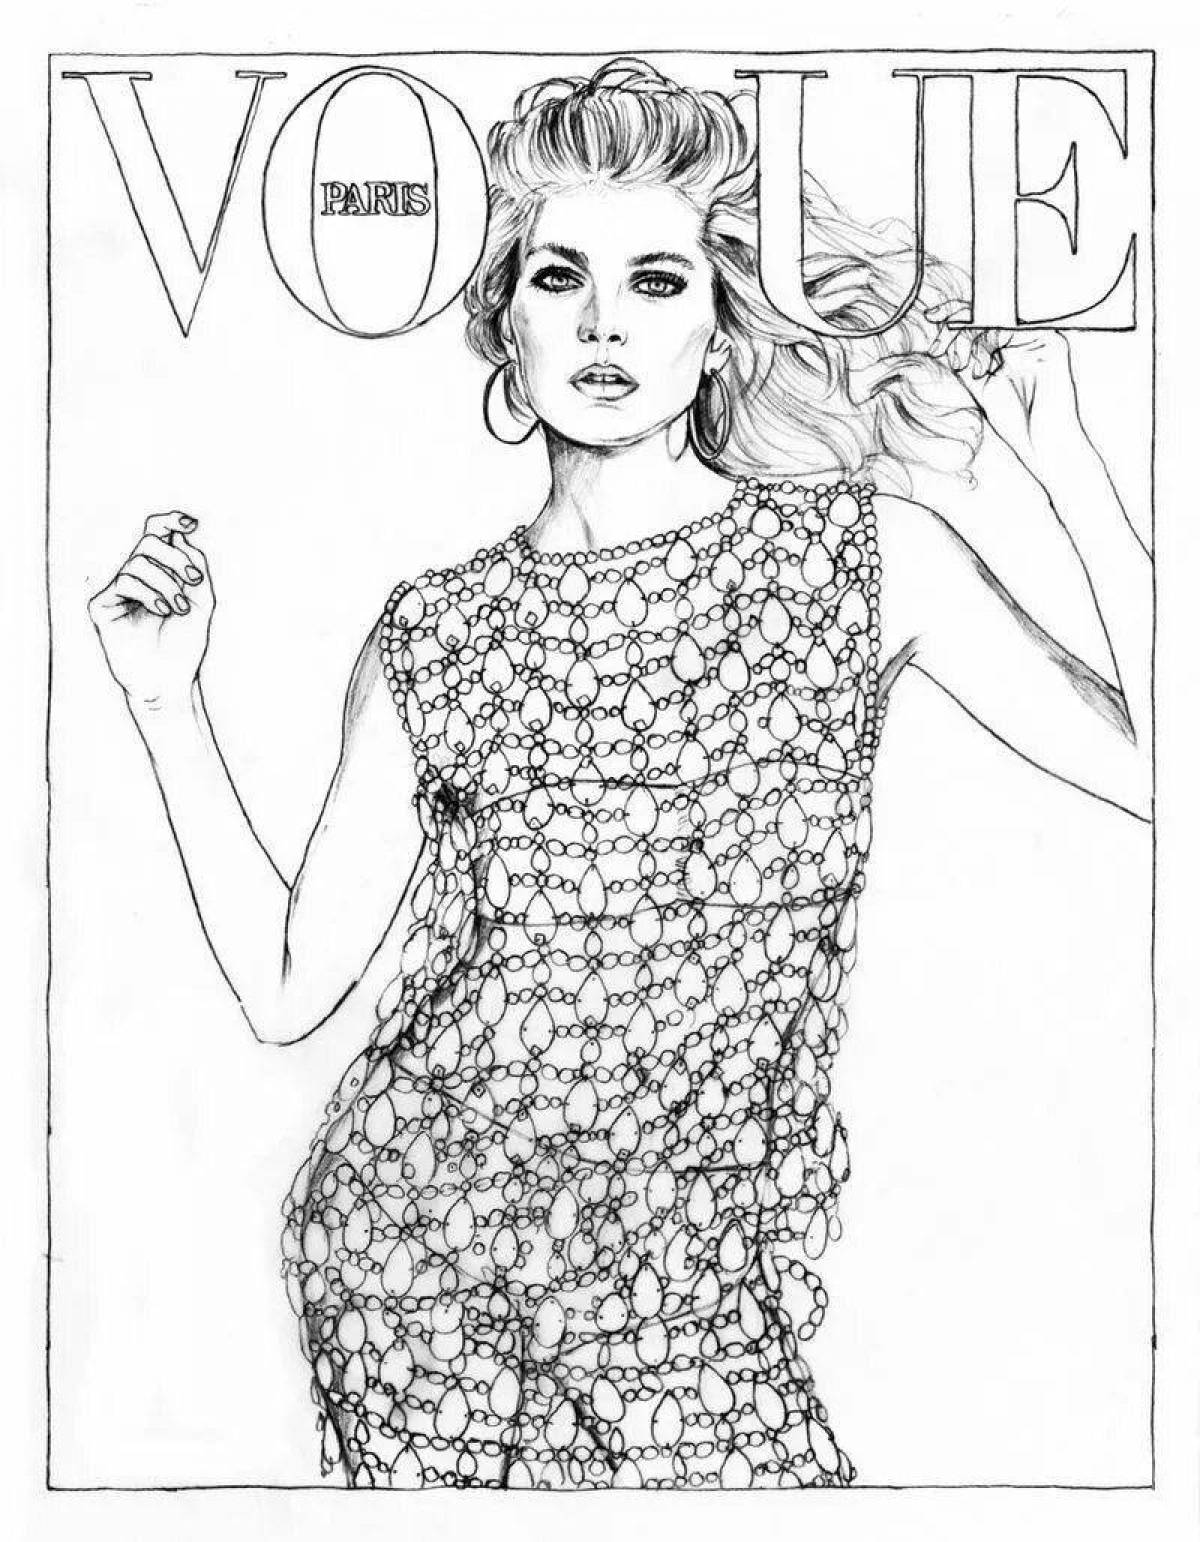 Vogue #6